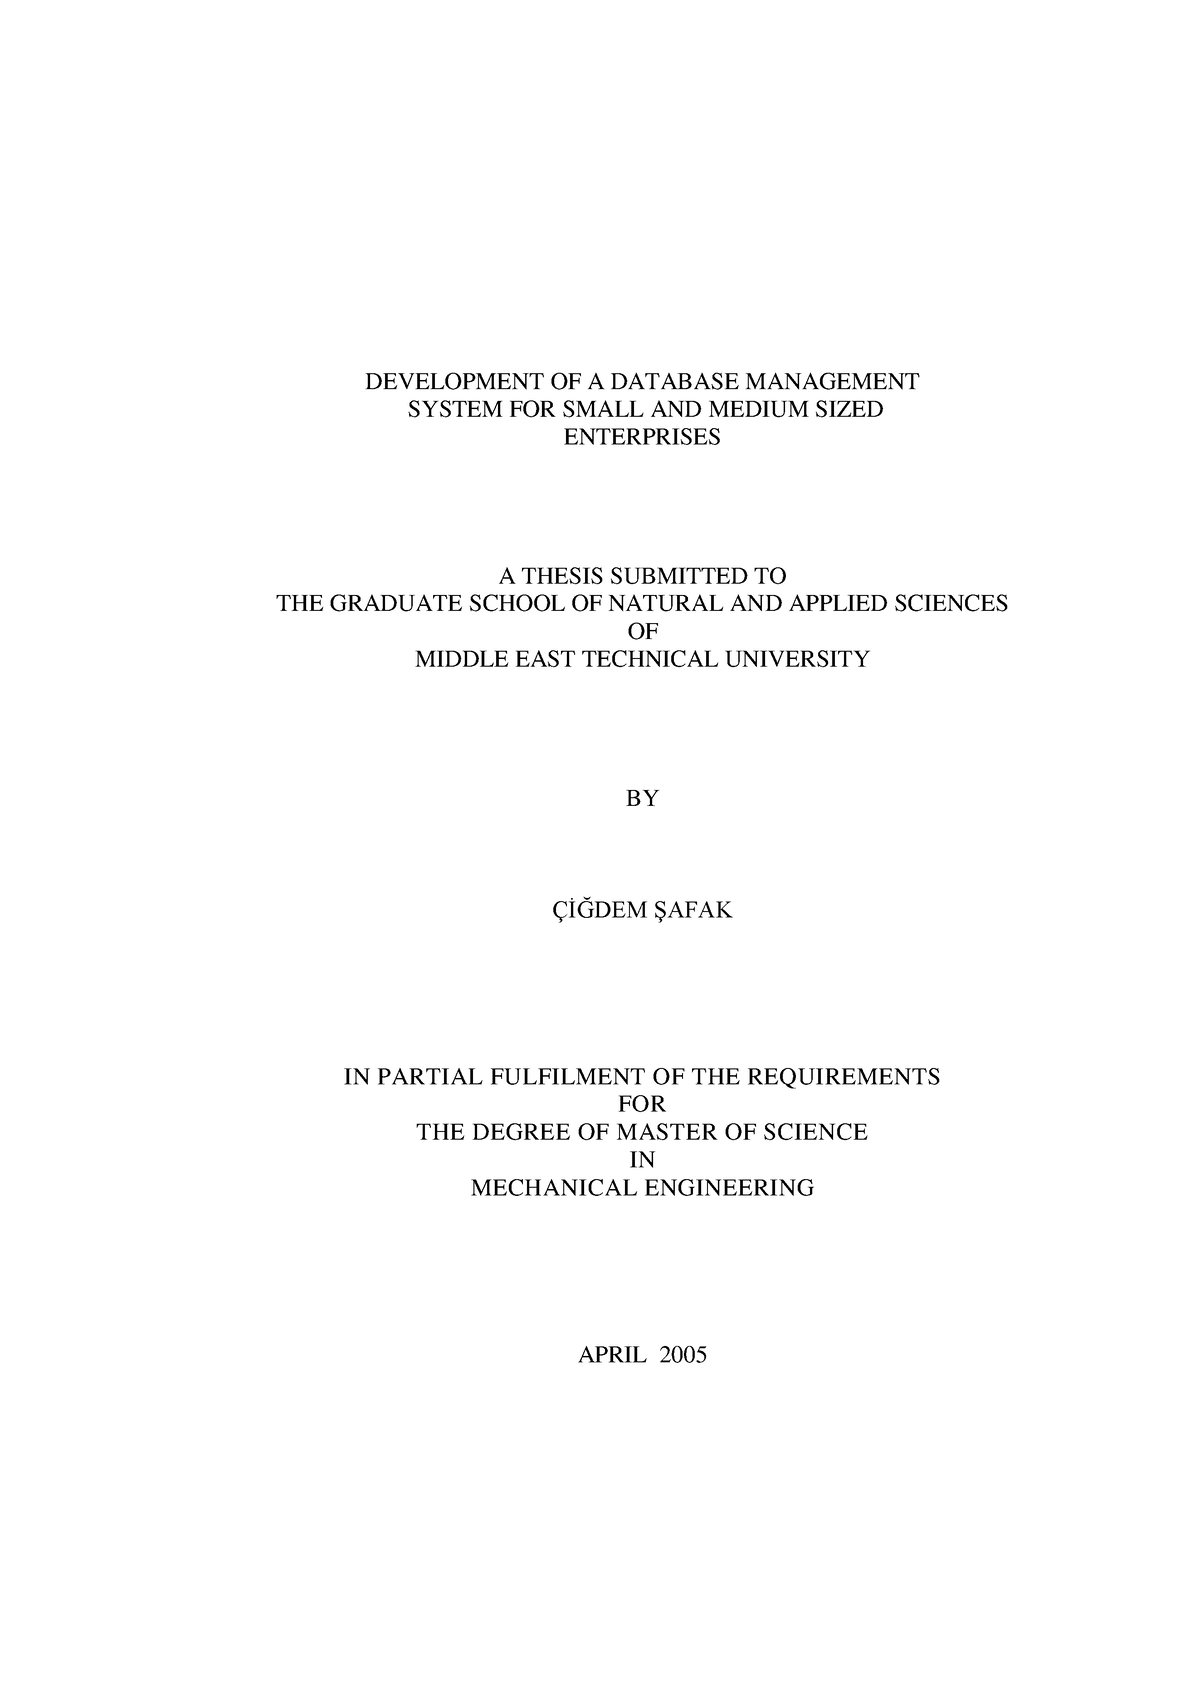 university of miami thesis database